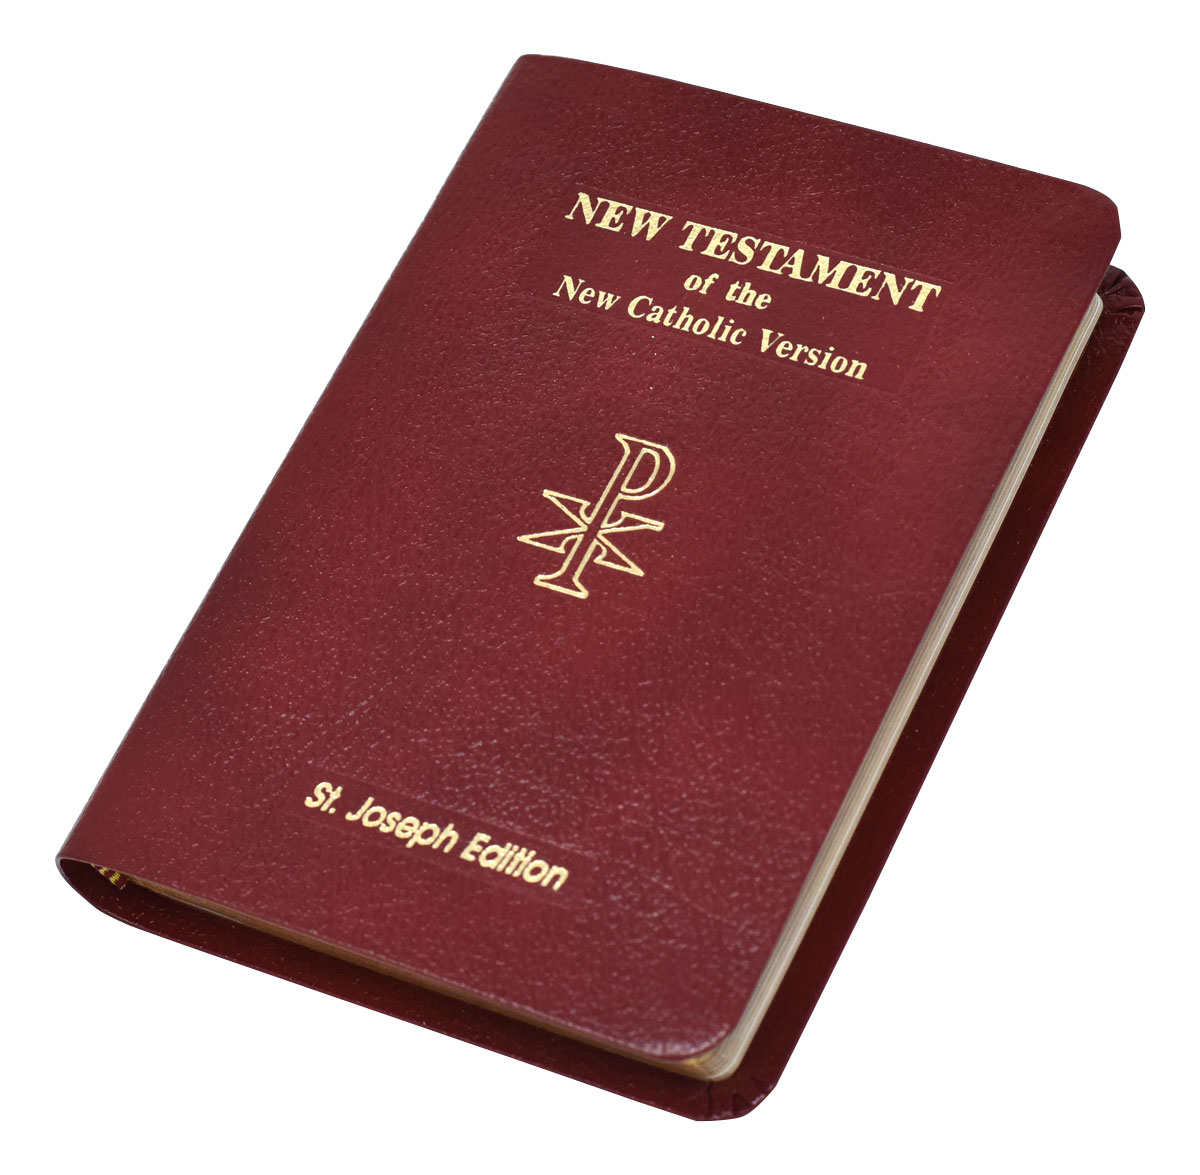 St. Joseph New Catholic Version New Testament Vest Pocket Edition Burgundy Bonded Leather 650/13